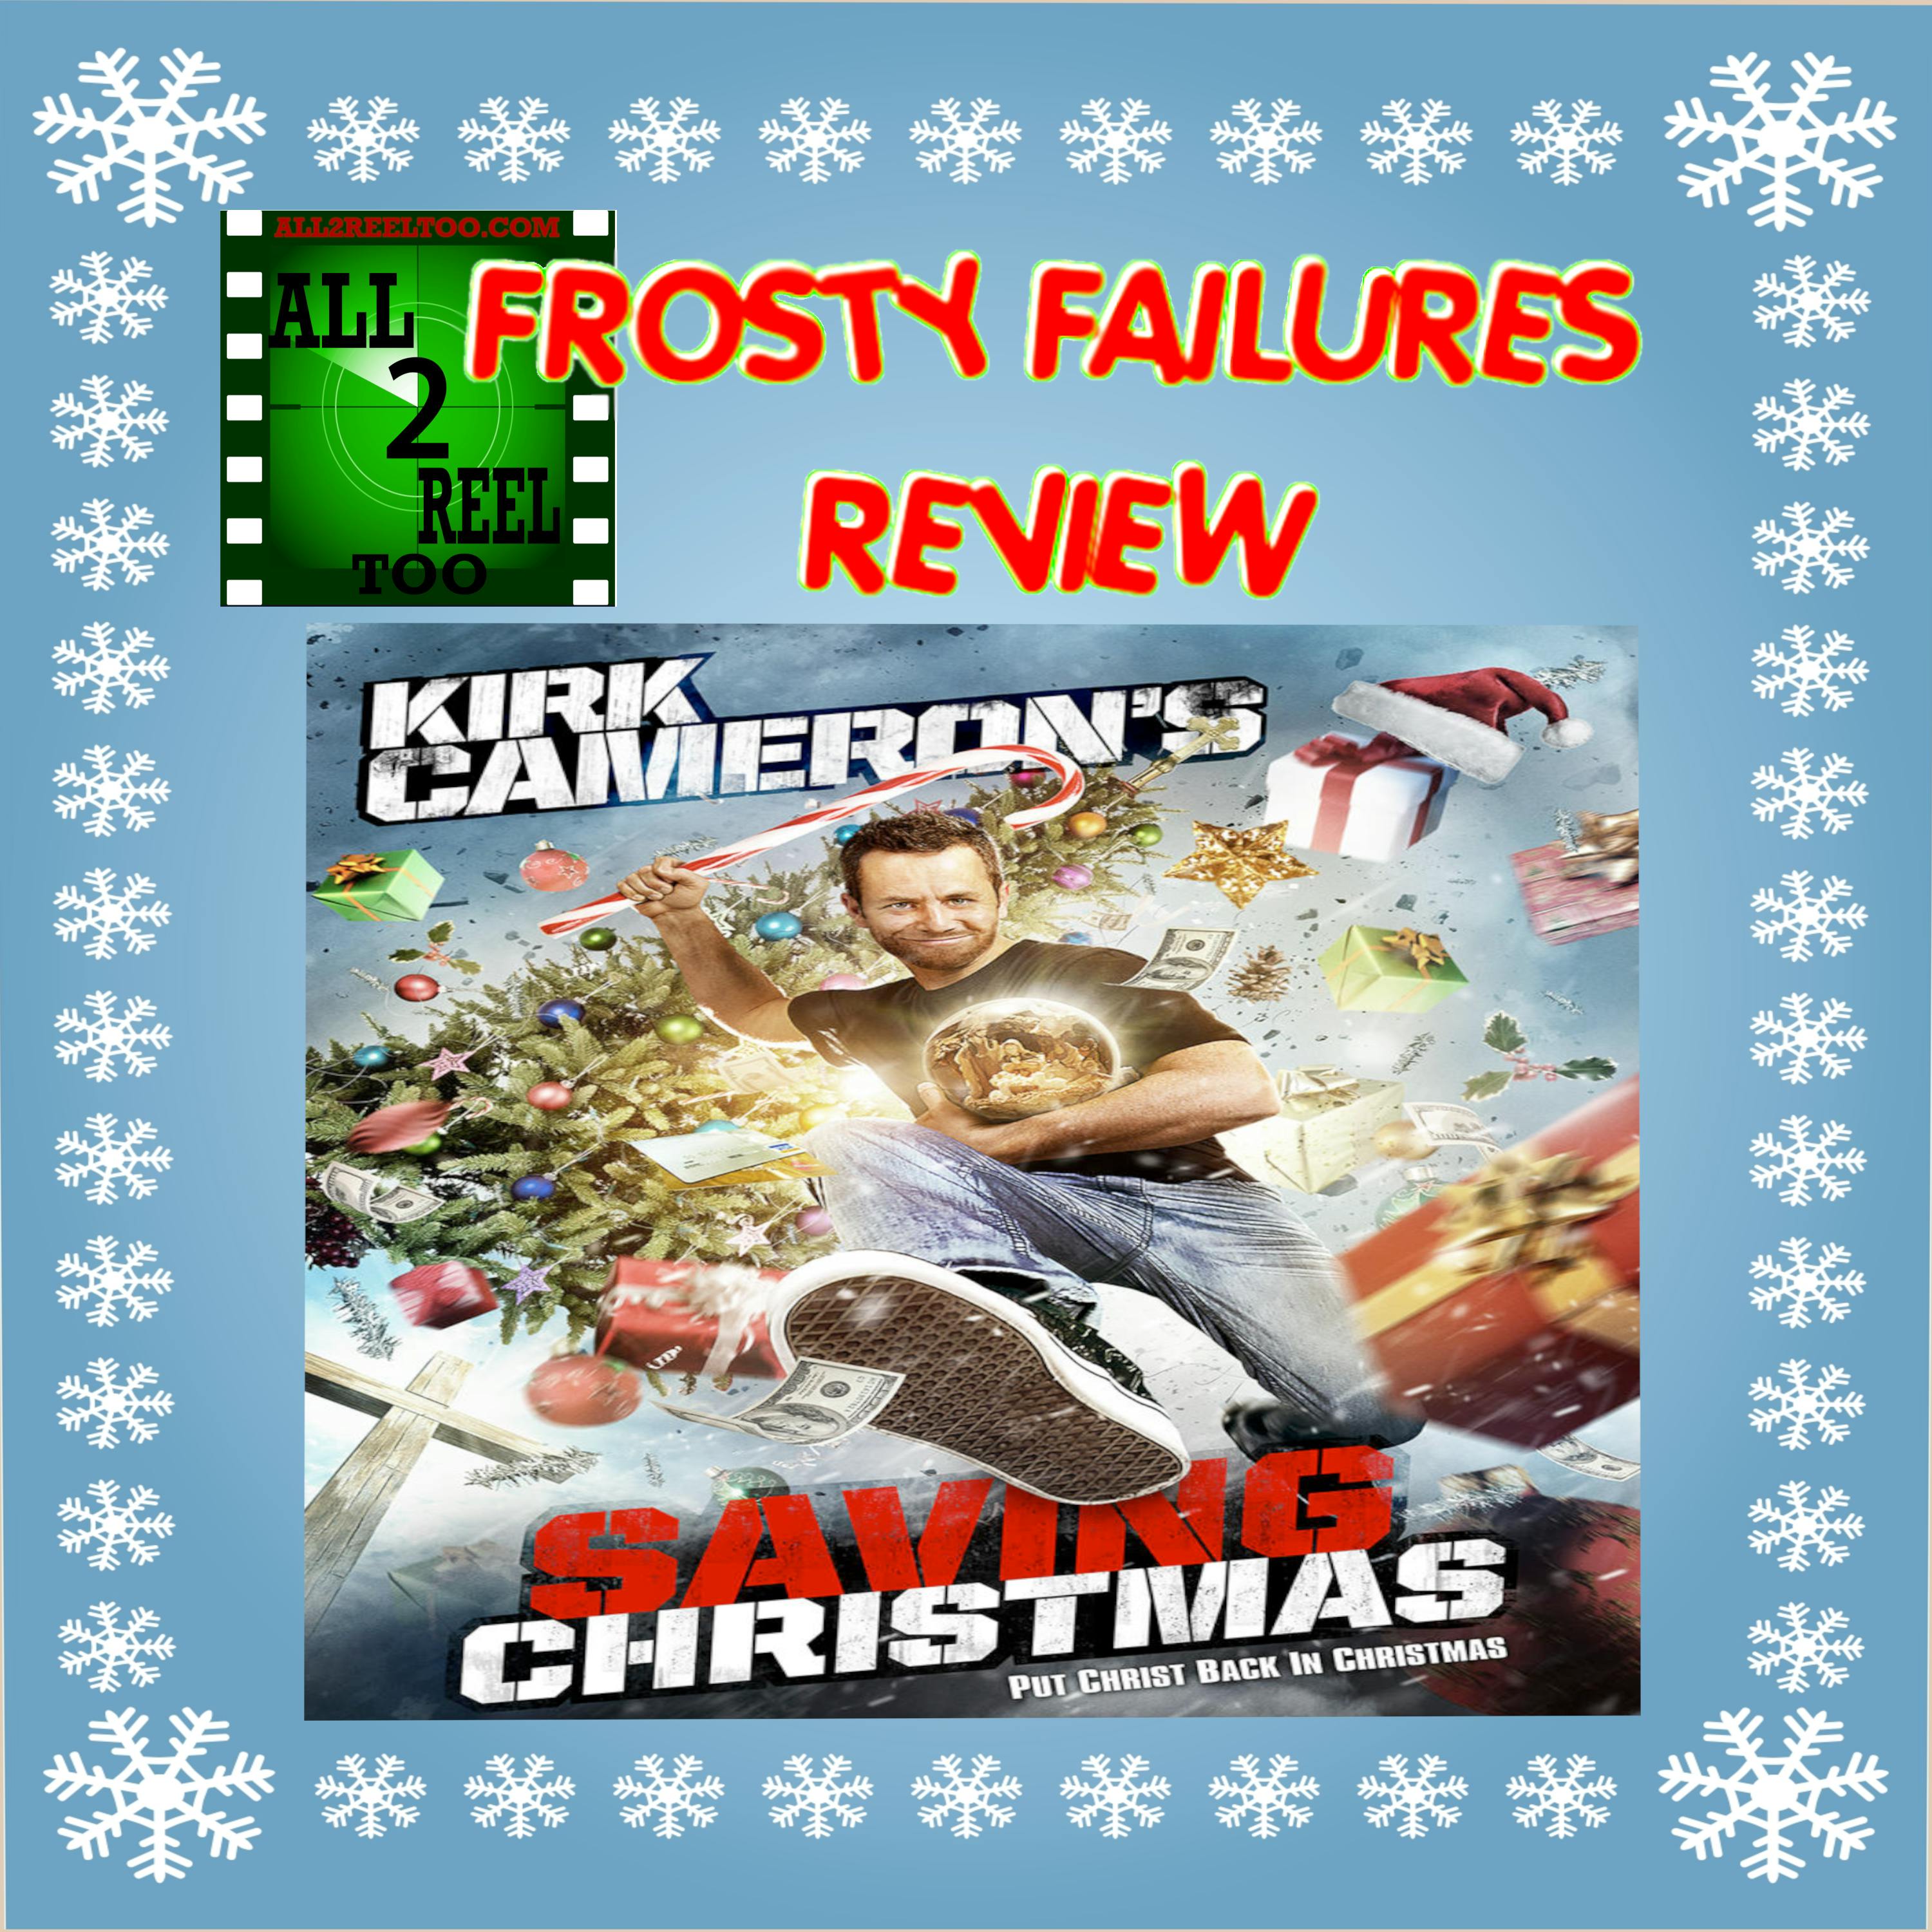 Kirk Cameron’s Saving Christmas (2014) - FROSTY FAILURES REVIEW